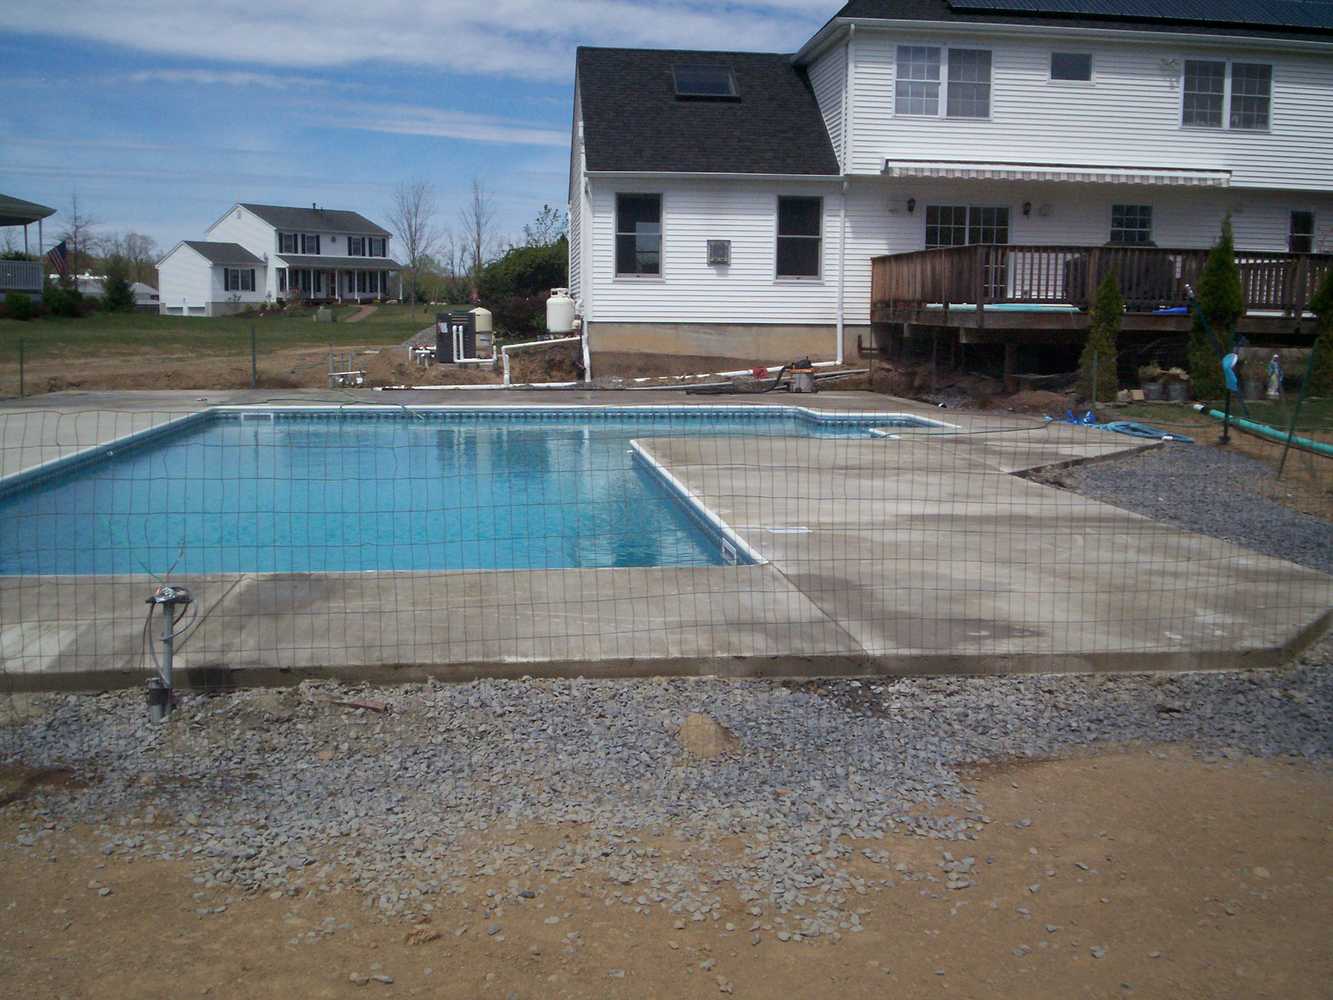 Concrete pool surround with broom finish